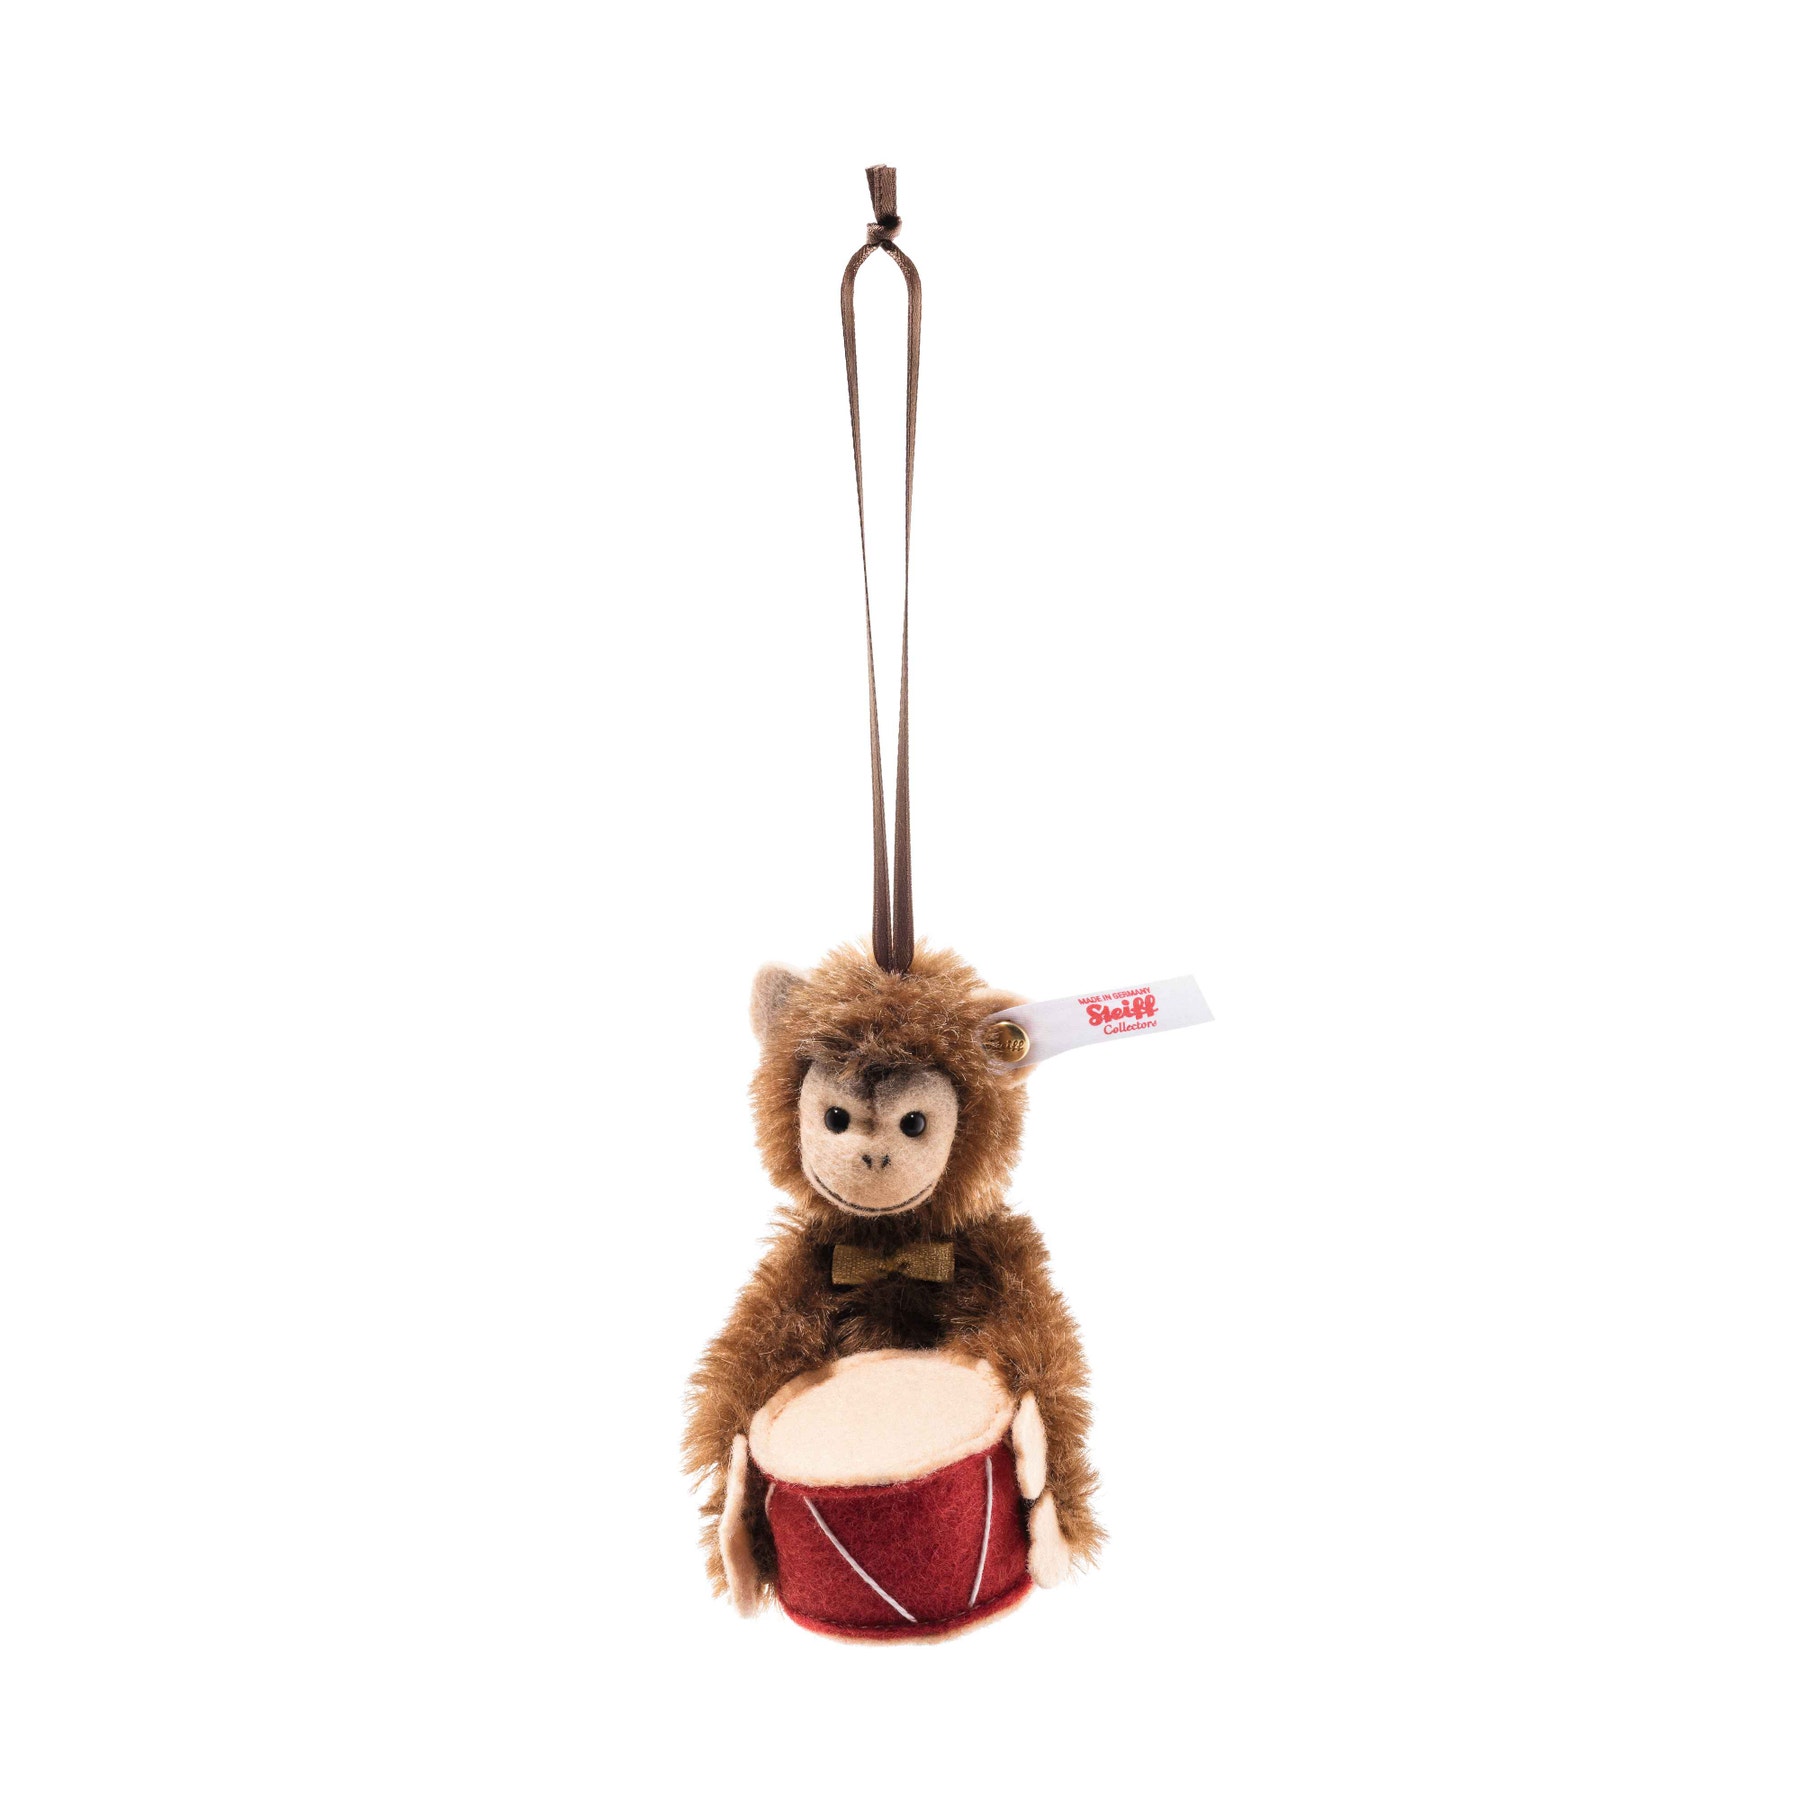 Jocko monkey ornament